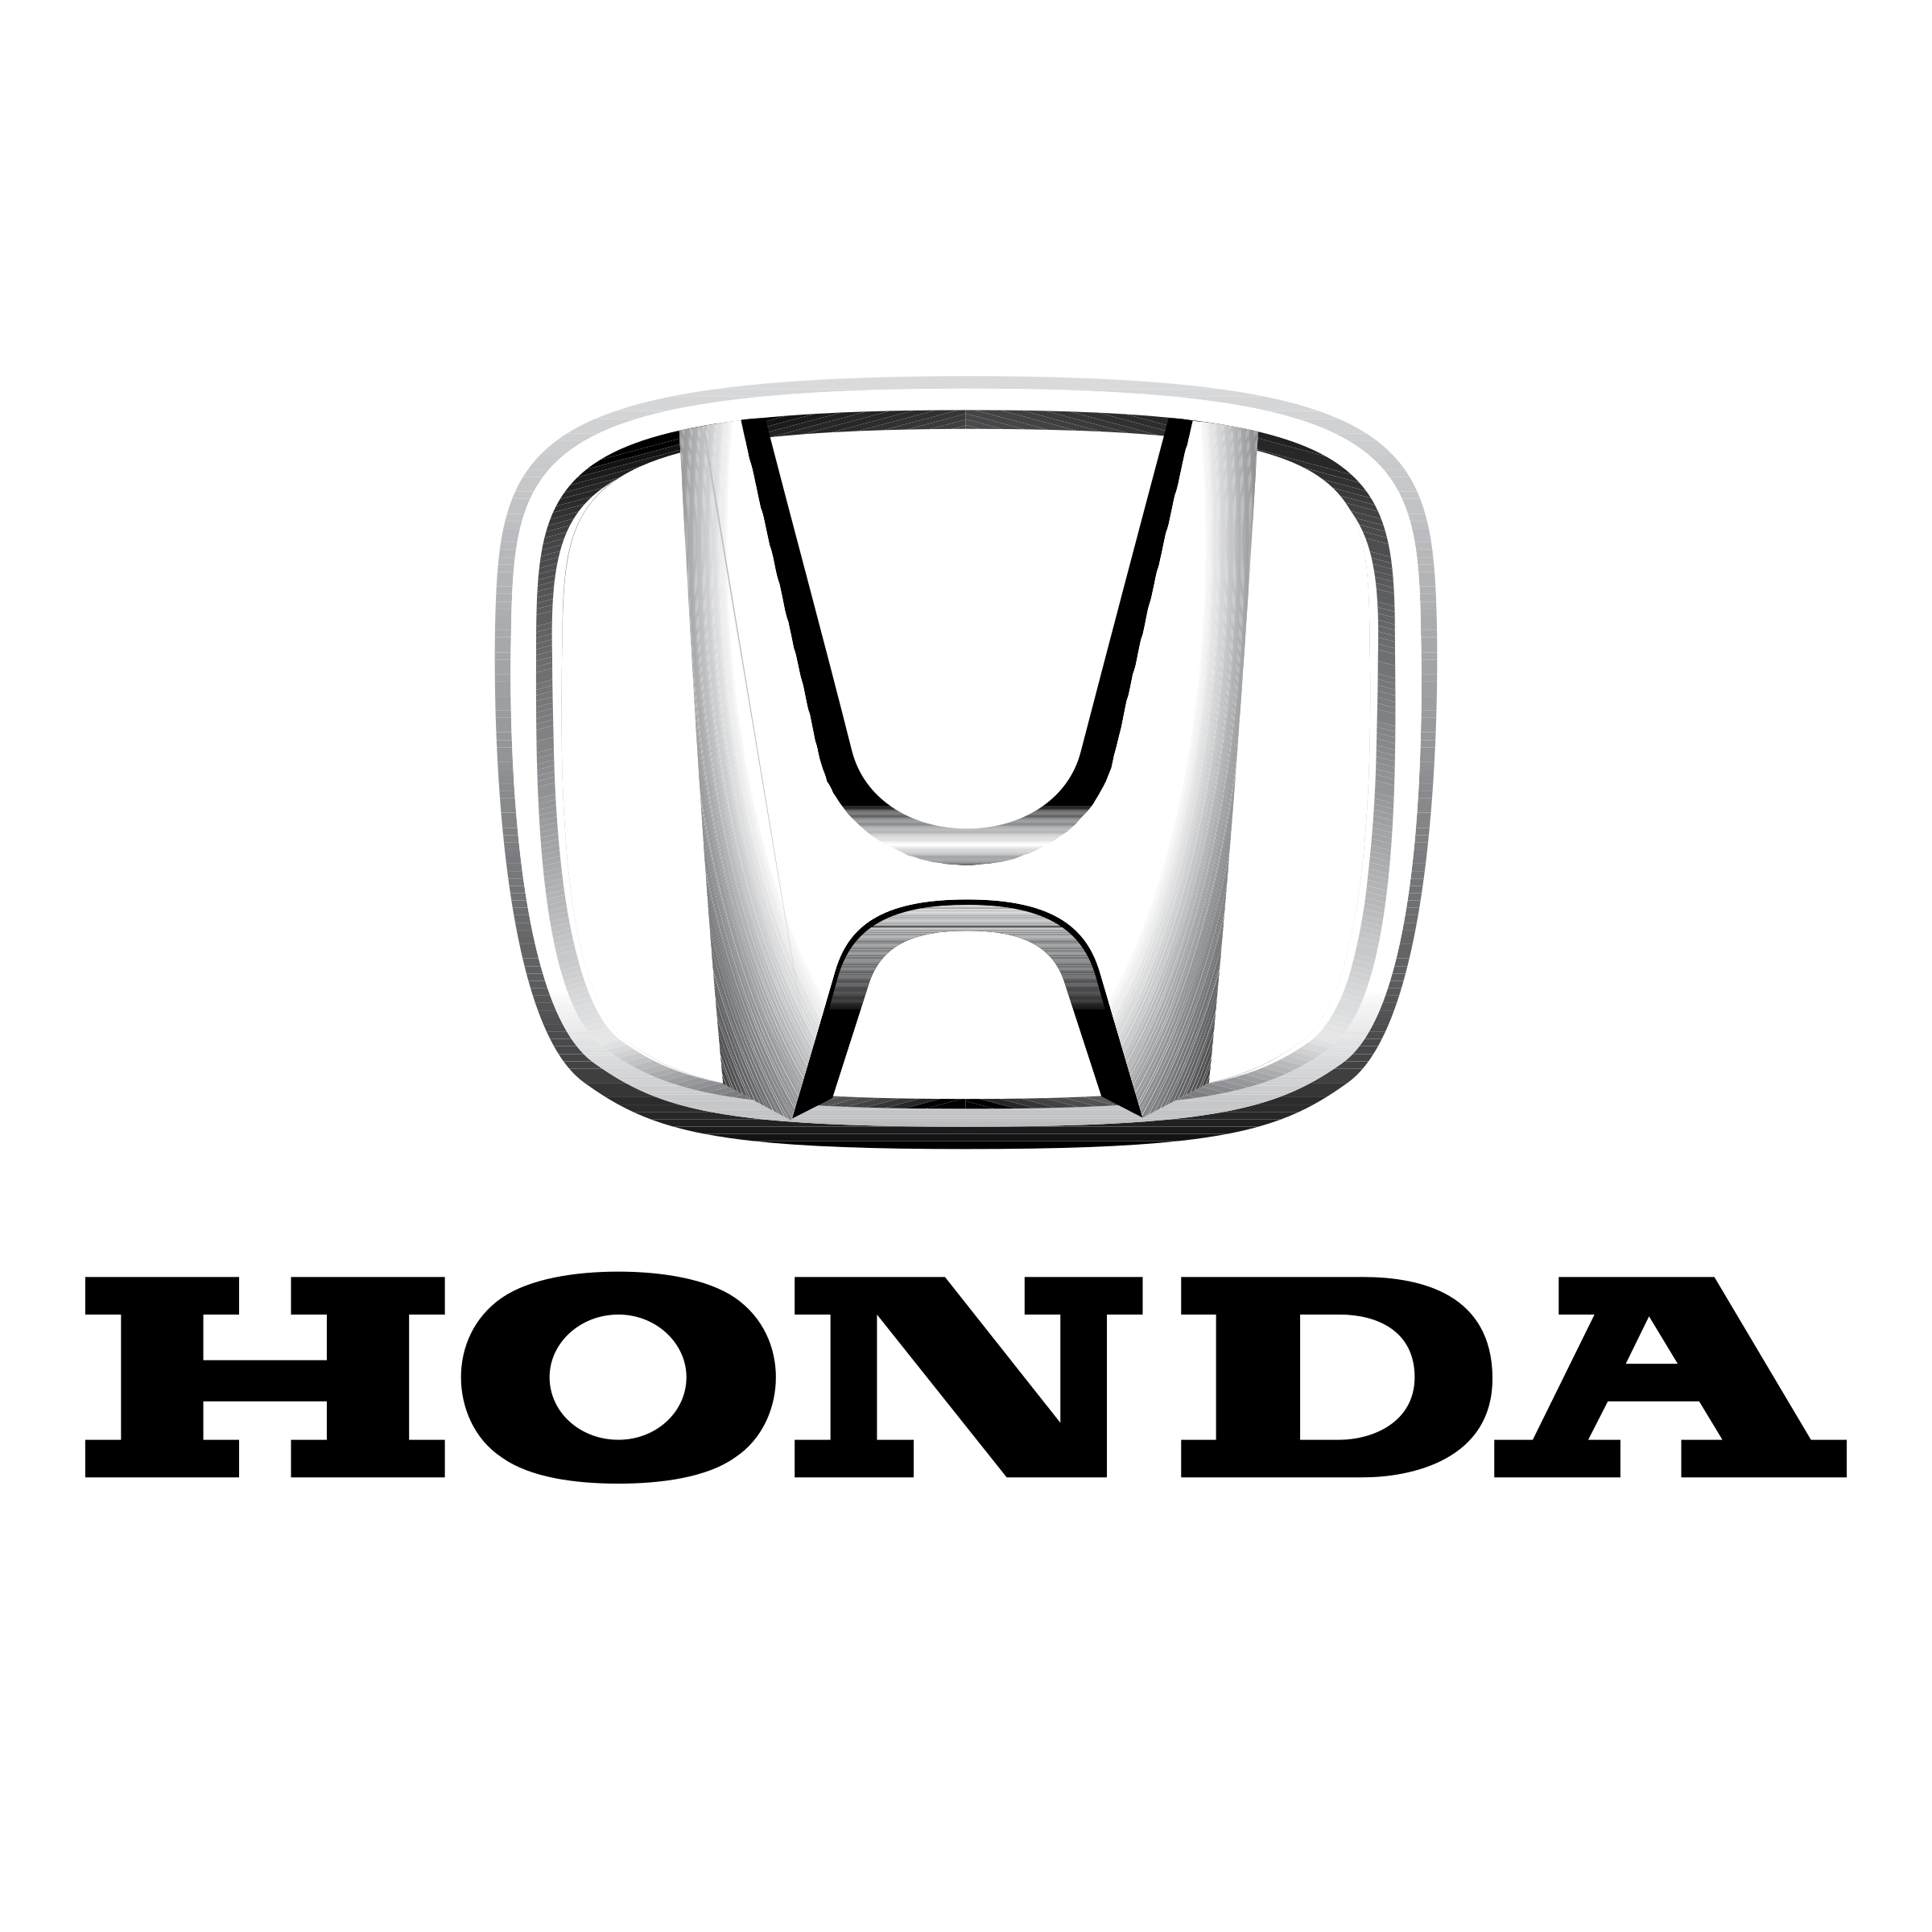 Honda Automobiles Logo PNG Transparent & SVG Vector.